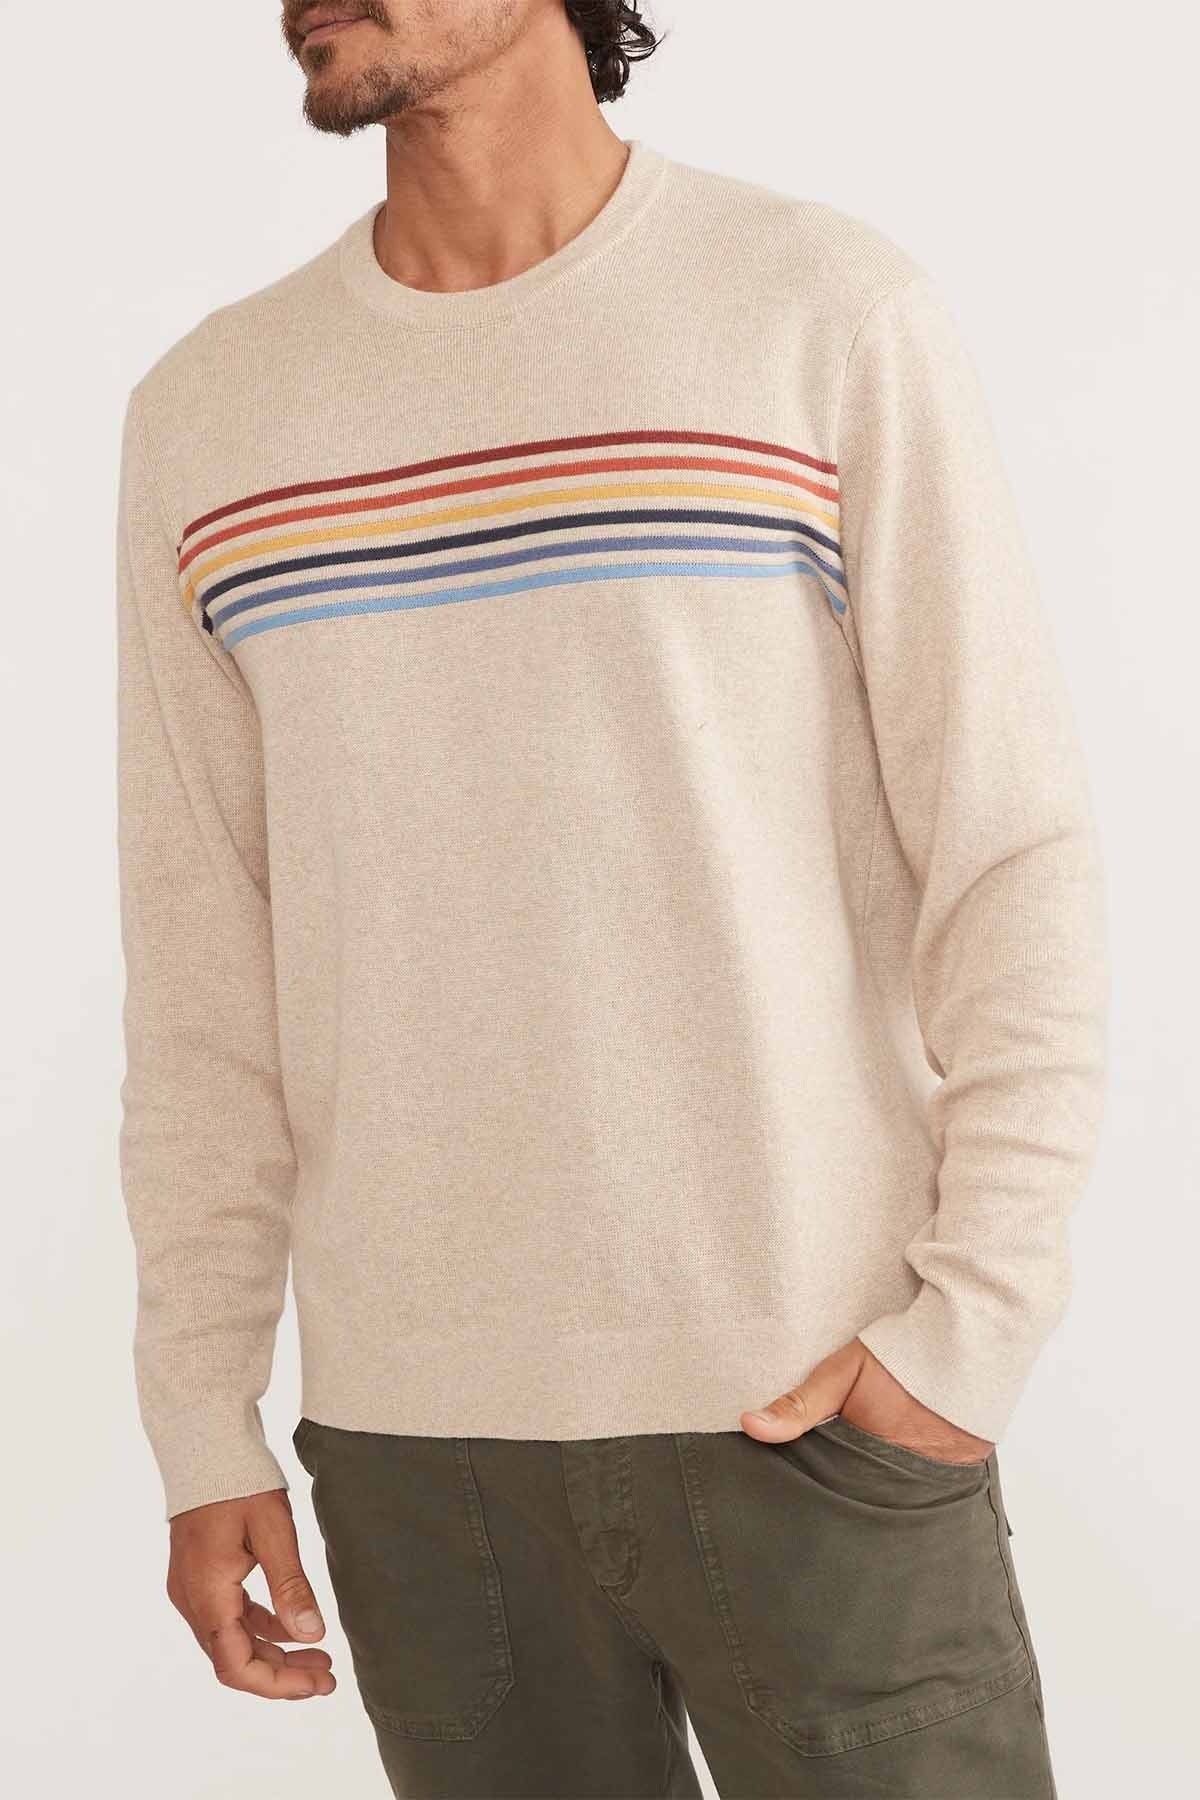 Marine Layer - Thompson Stripe Sweater - Oatmeal - Front